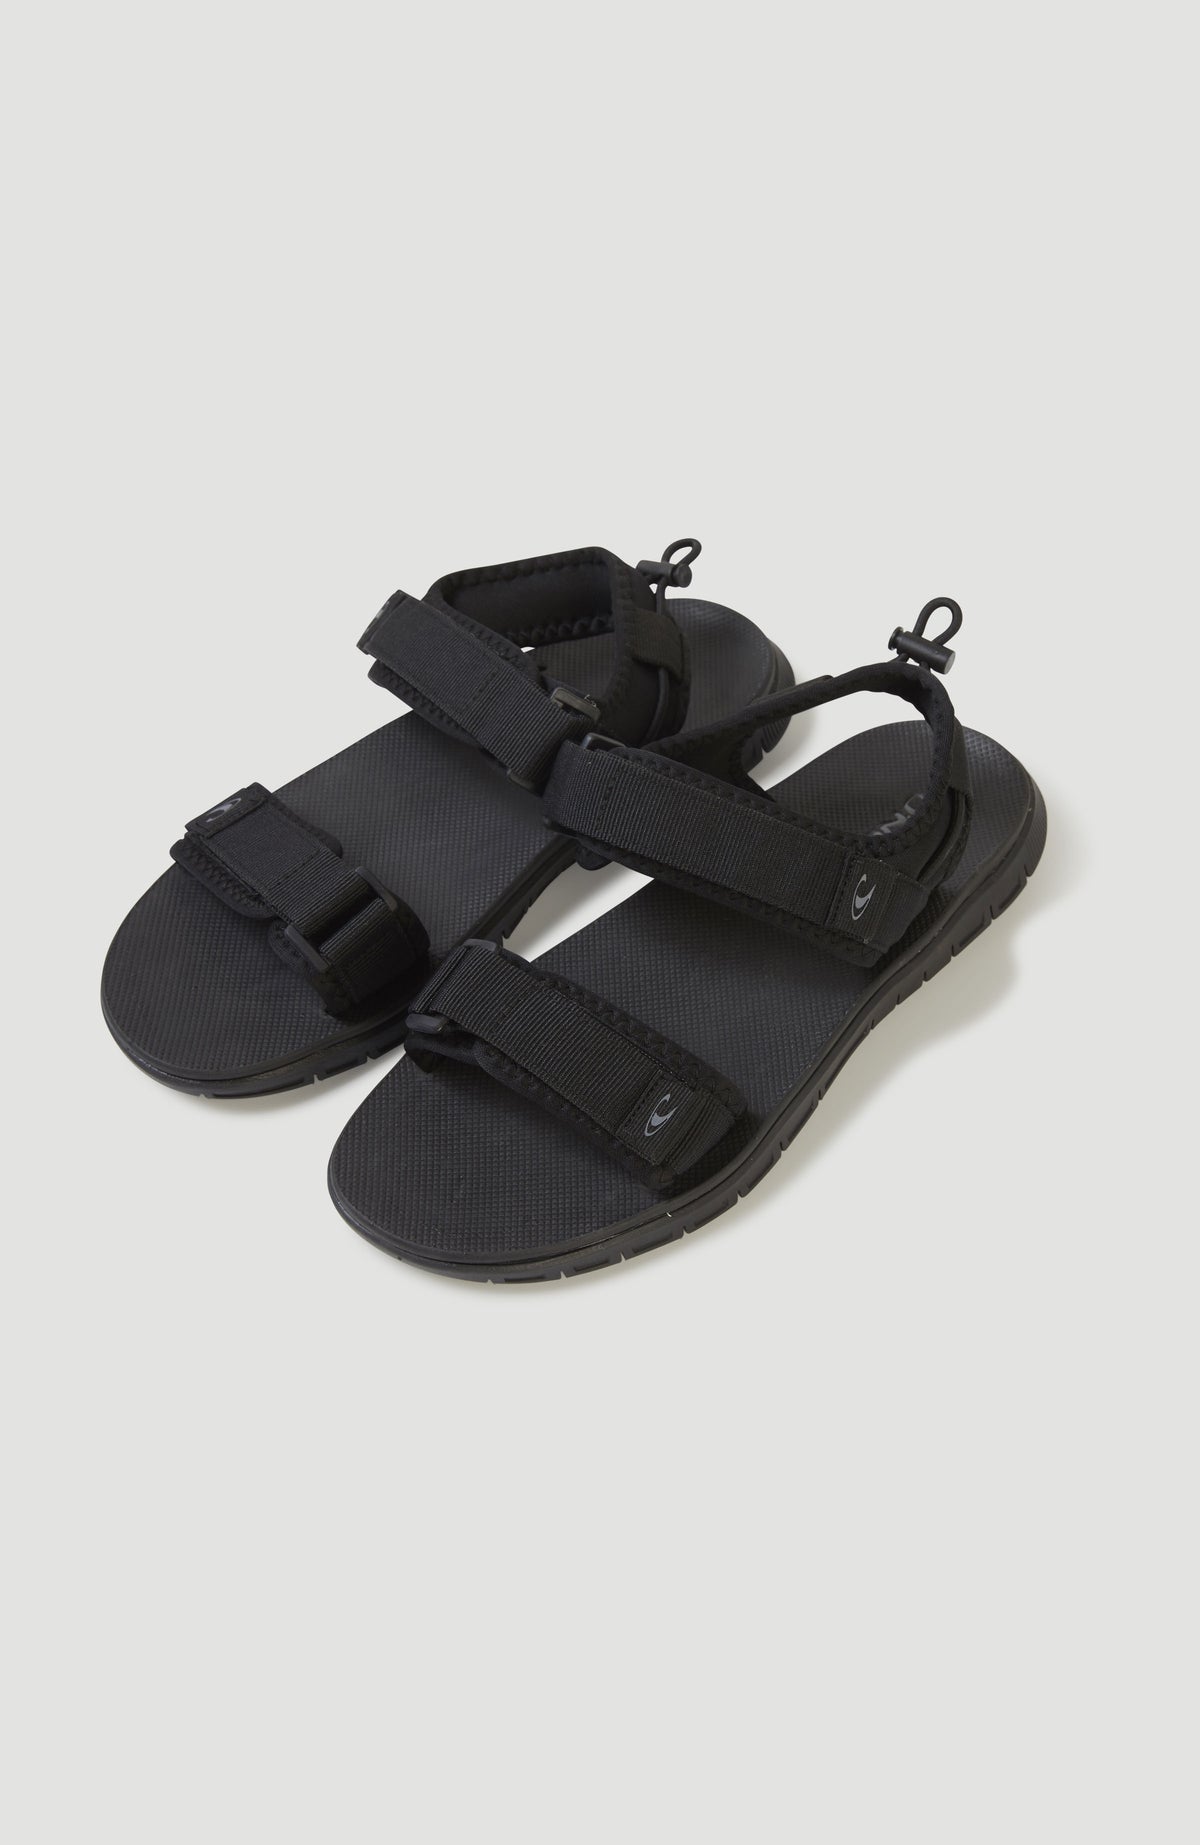 Men's Walking Sandals Kisumu 3S (black) | MBT Online Shoes Store UK